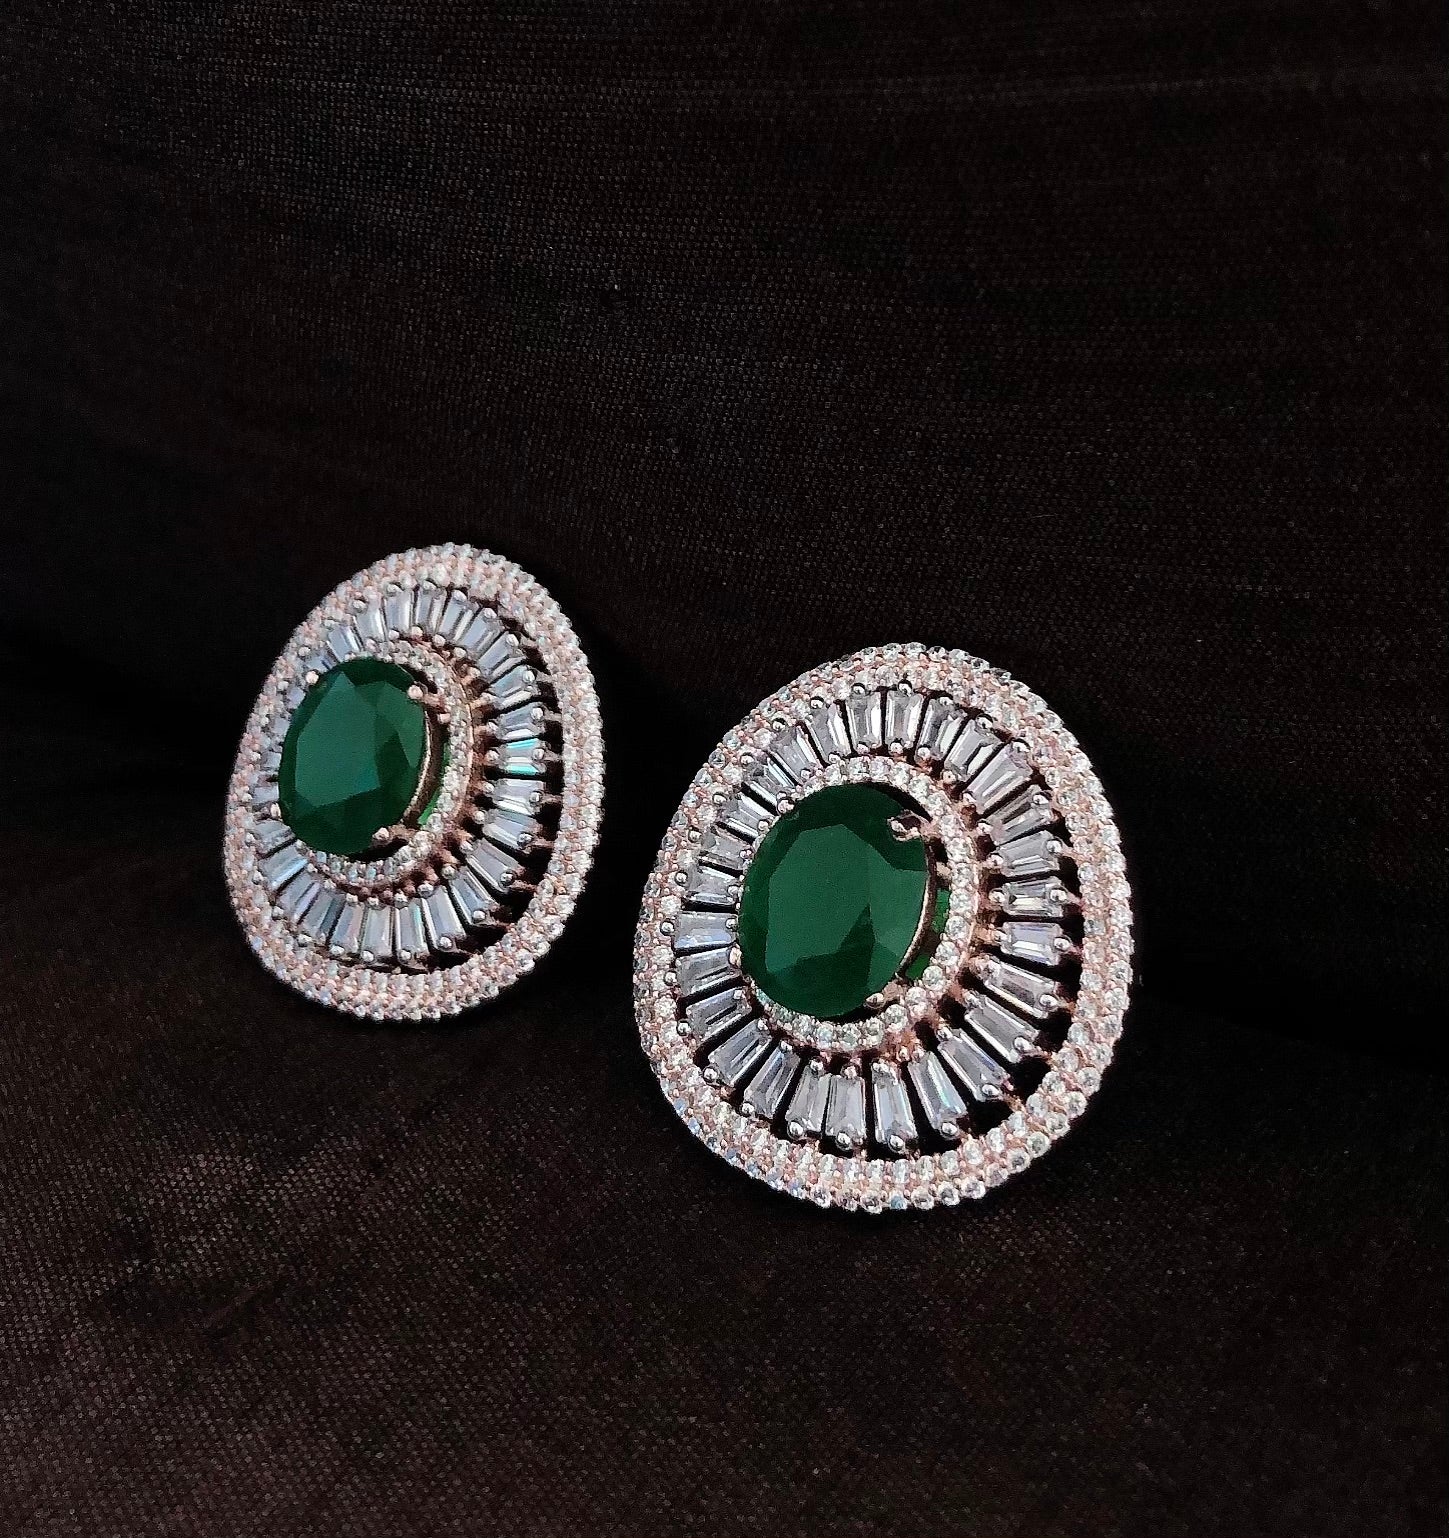 Details more than 134 green diamond earrings best